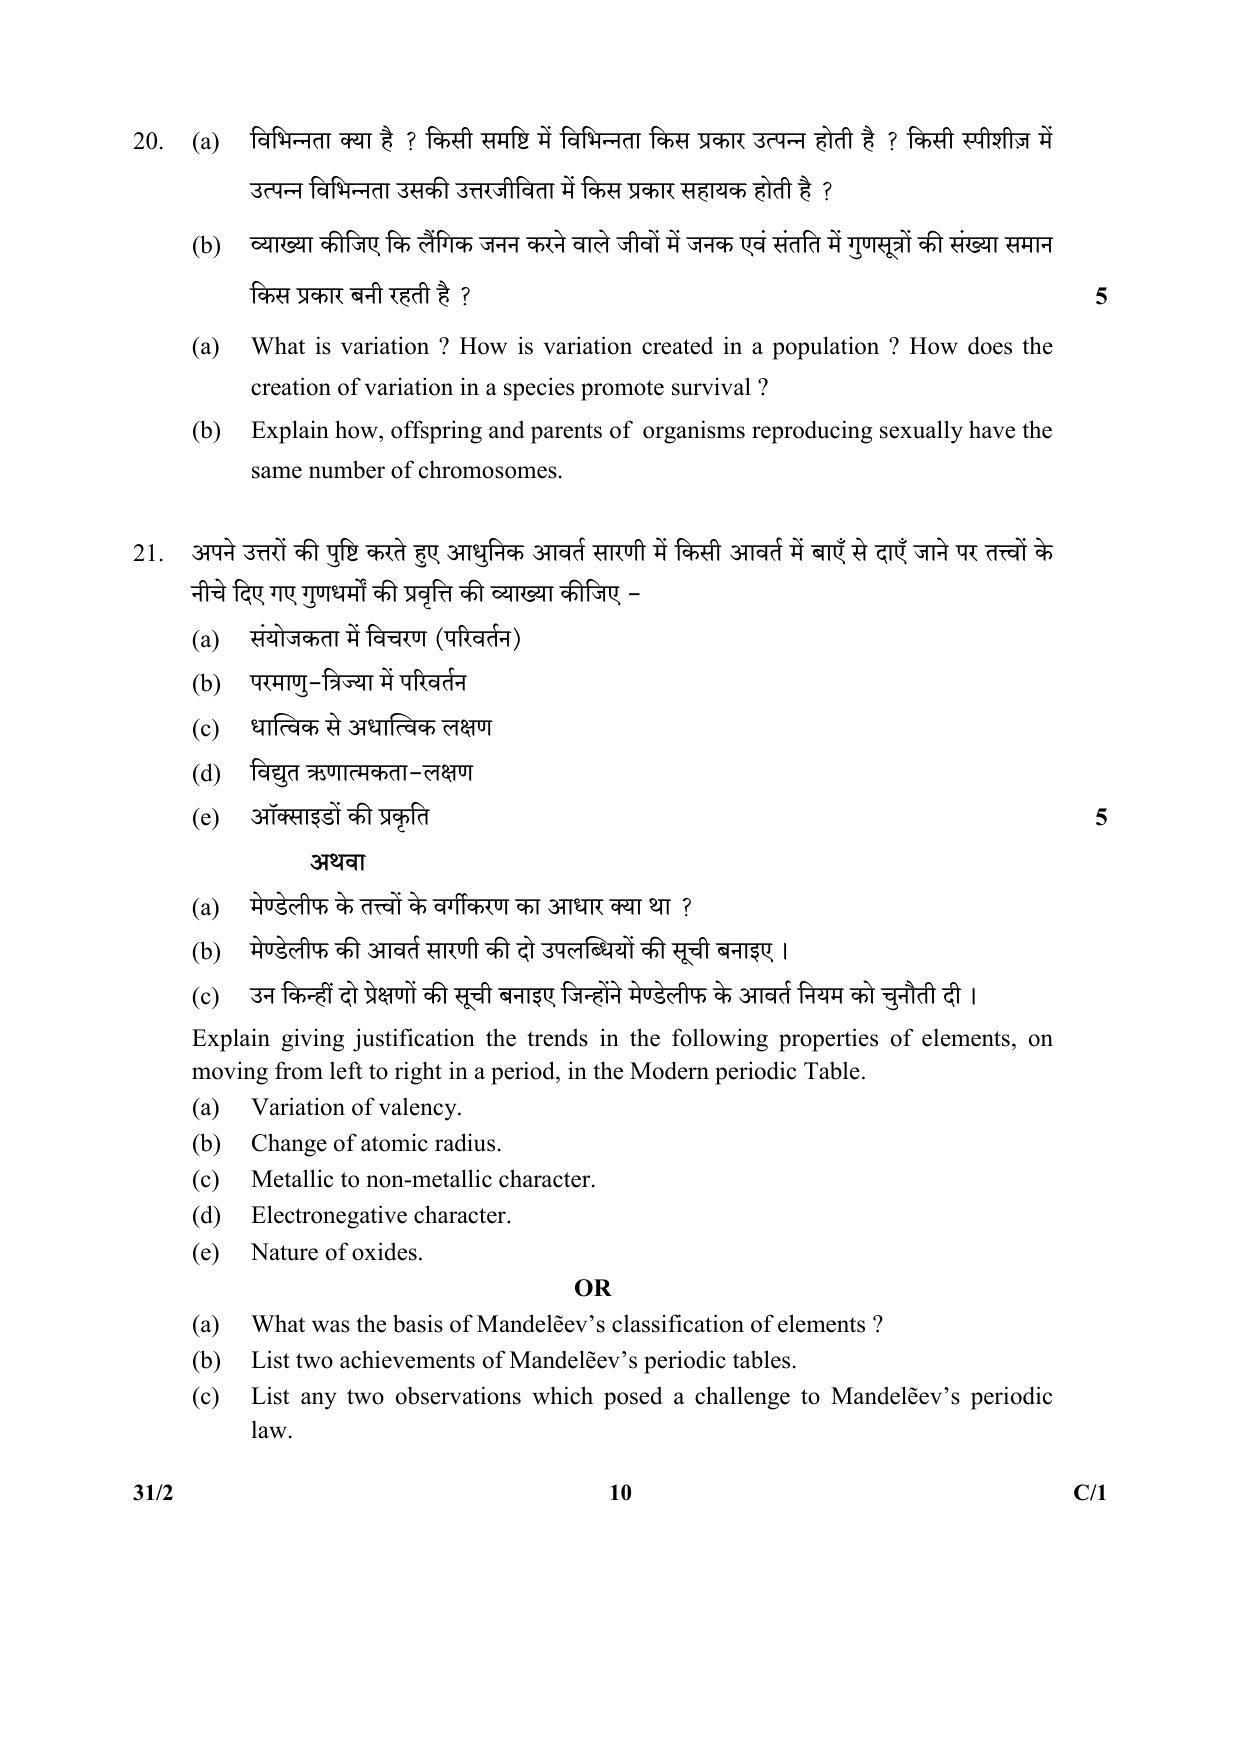 CBSE Class 10 41-2 Science PUNJABI VERSION 2018 Compartment Question Paper - Page 18